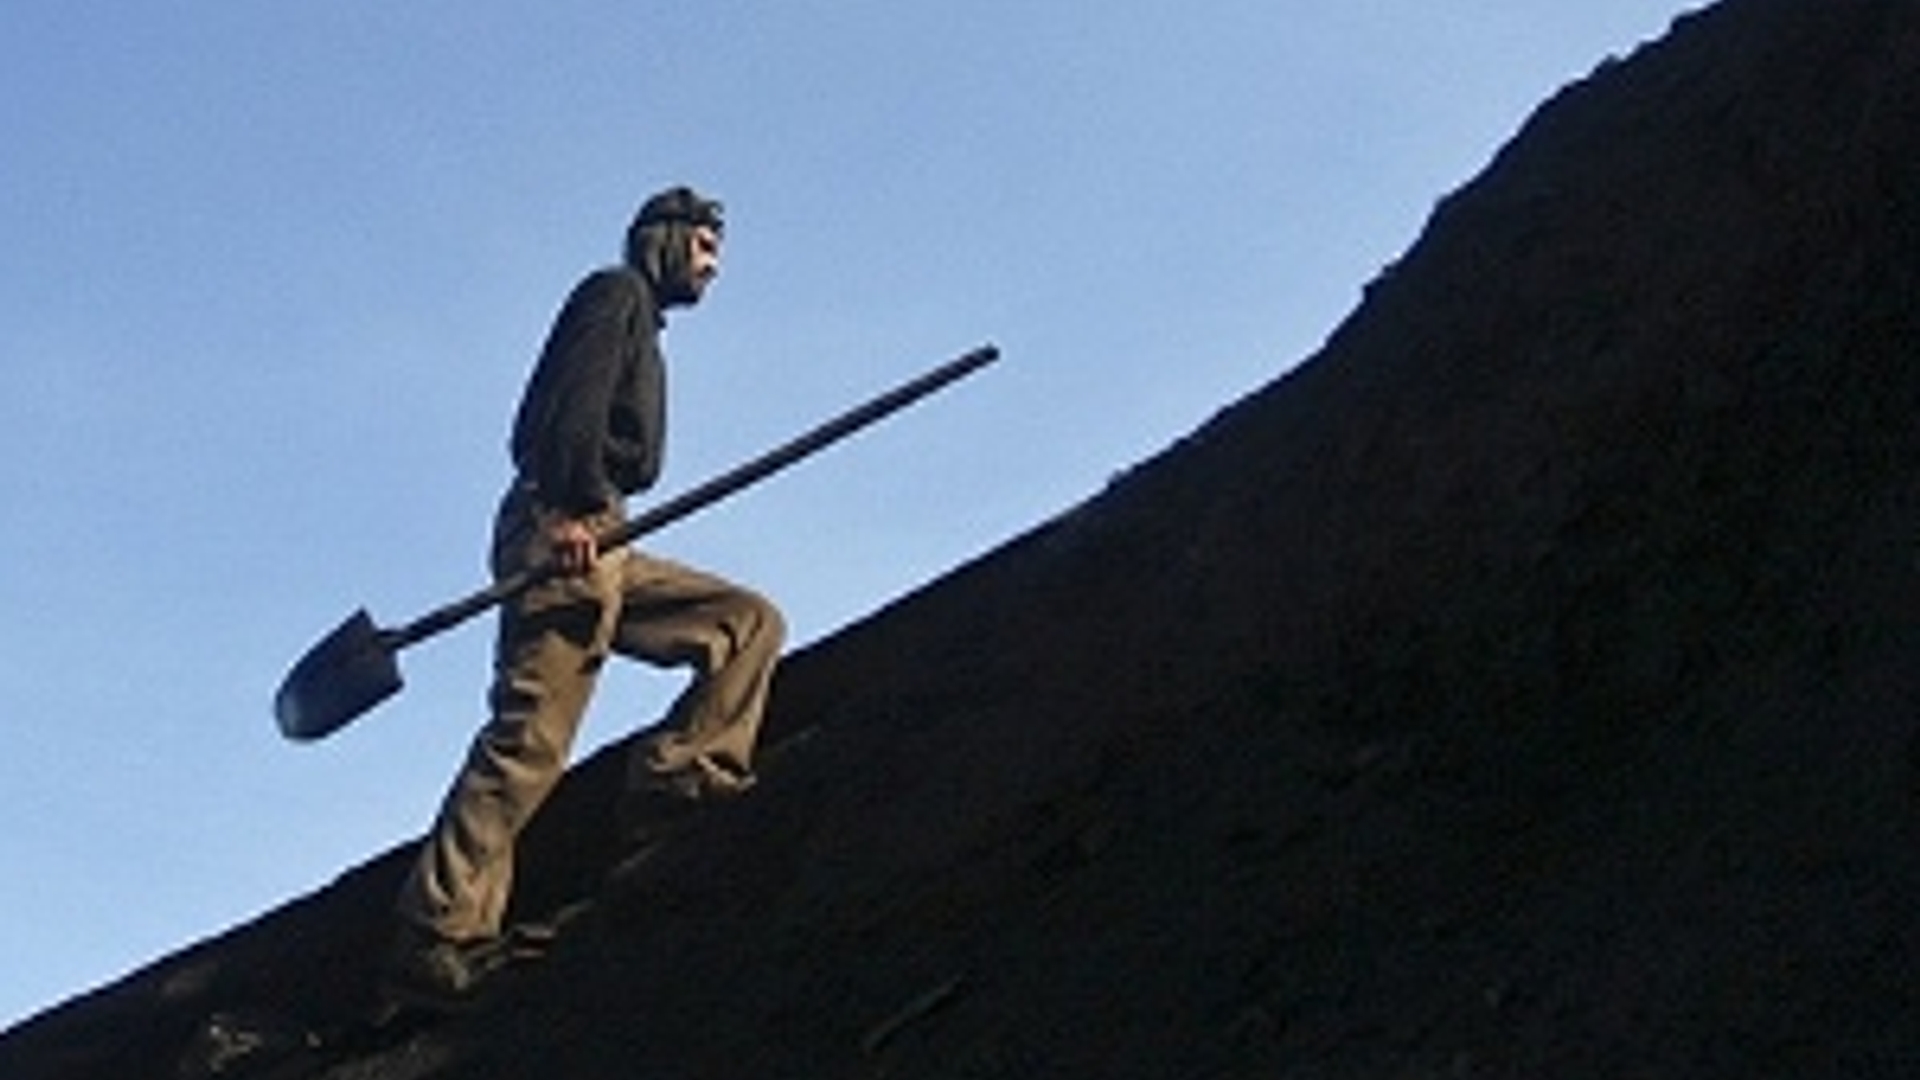 Flickr_afghanistan_mijnwerker300.jpg